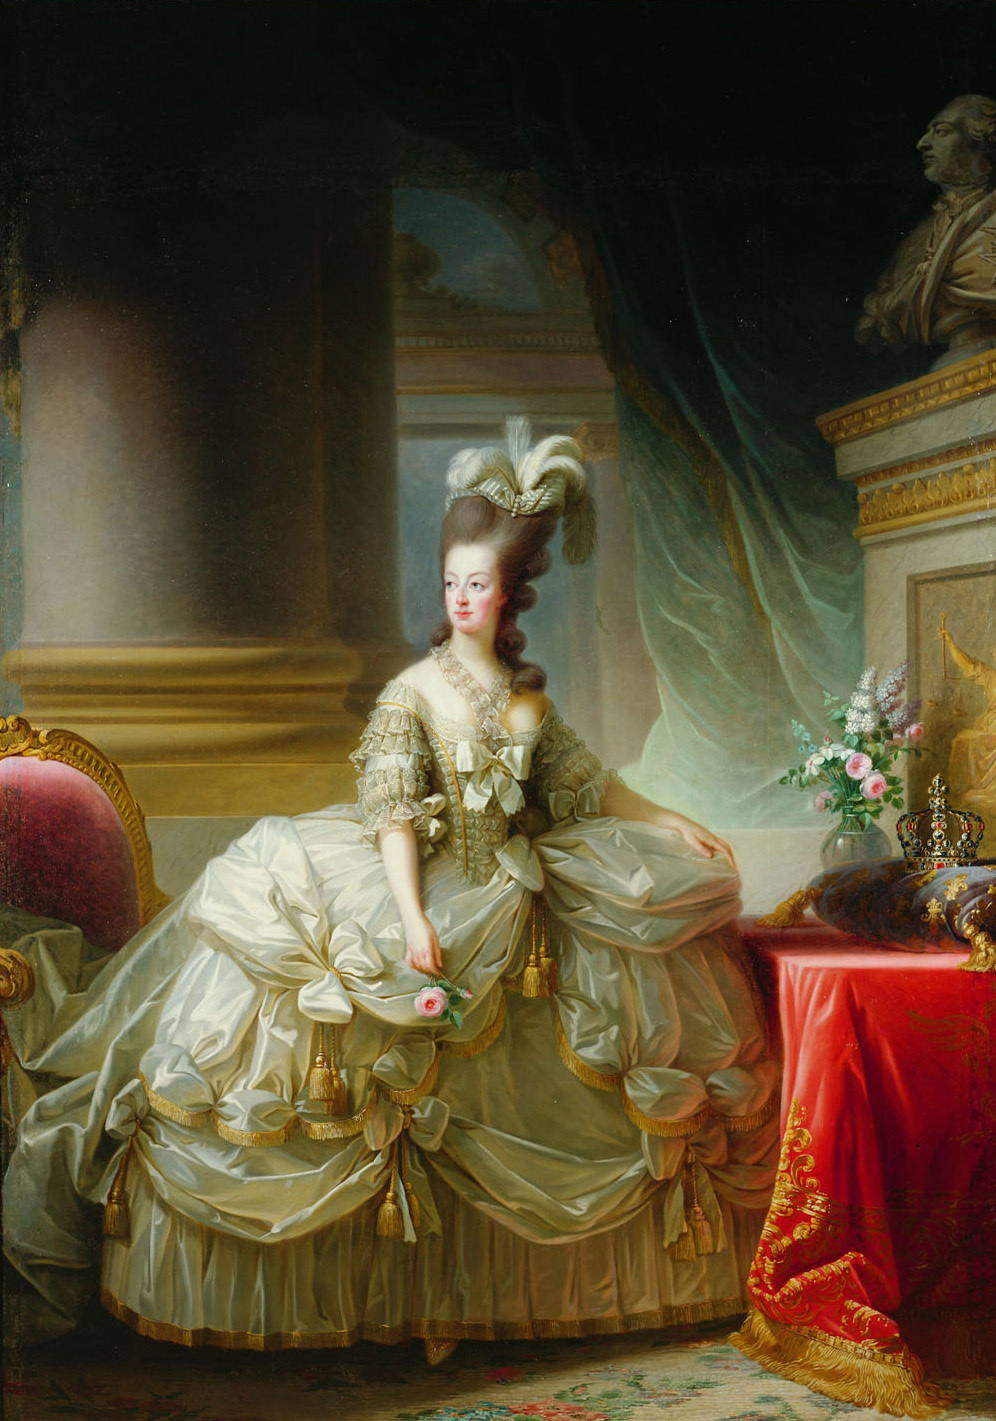 Regina Franței, arhiducesa Maria-Antoaneta by Élisabeth Vigee Le Brun - 1778 - 273 x 193,5 cm 